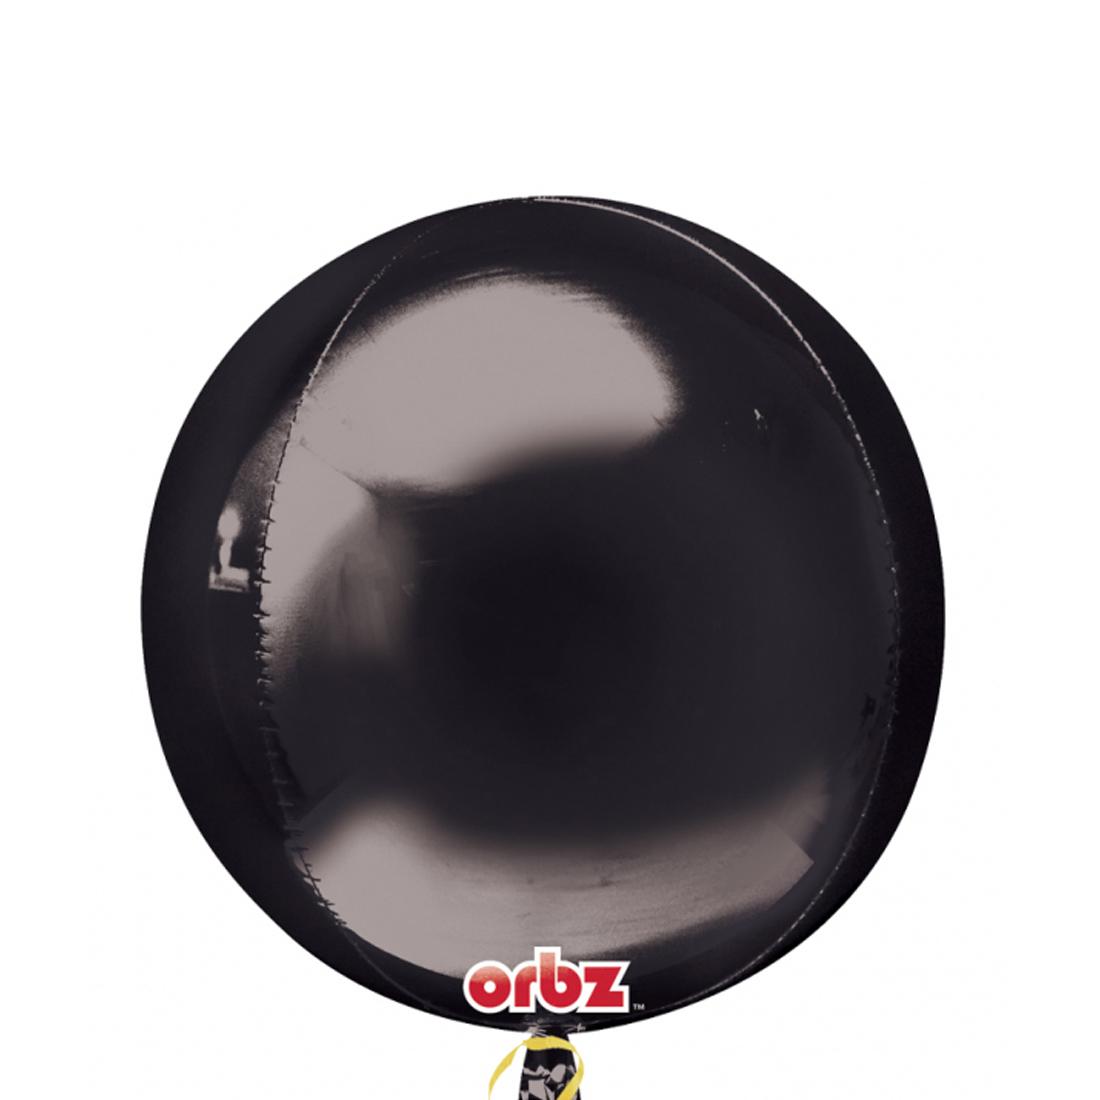 Black Orbz Foil Balloon 38x40cm Balloons & Streamers - Party Centre